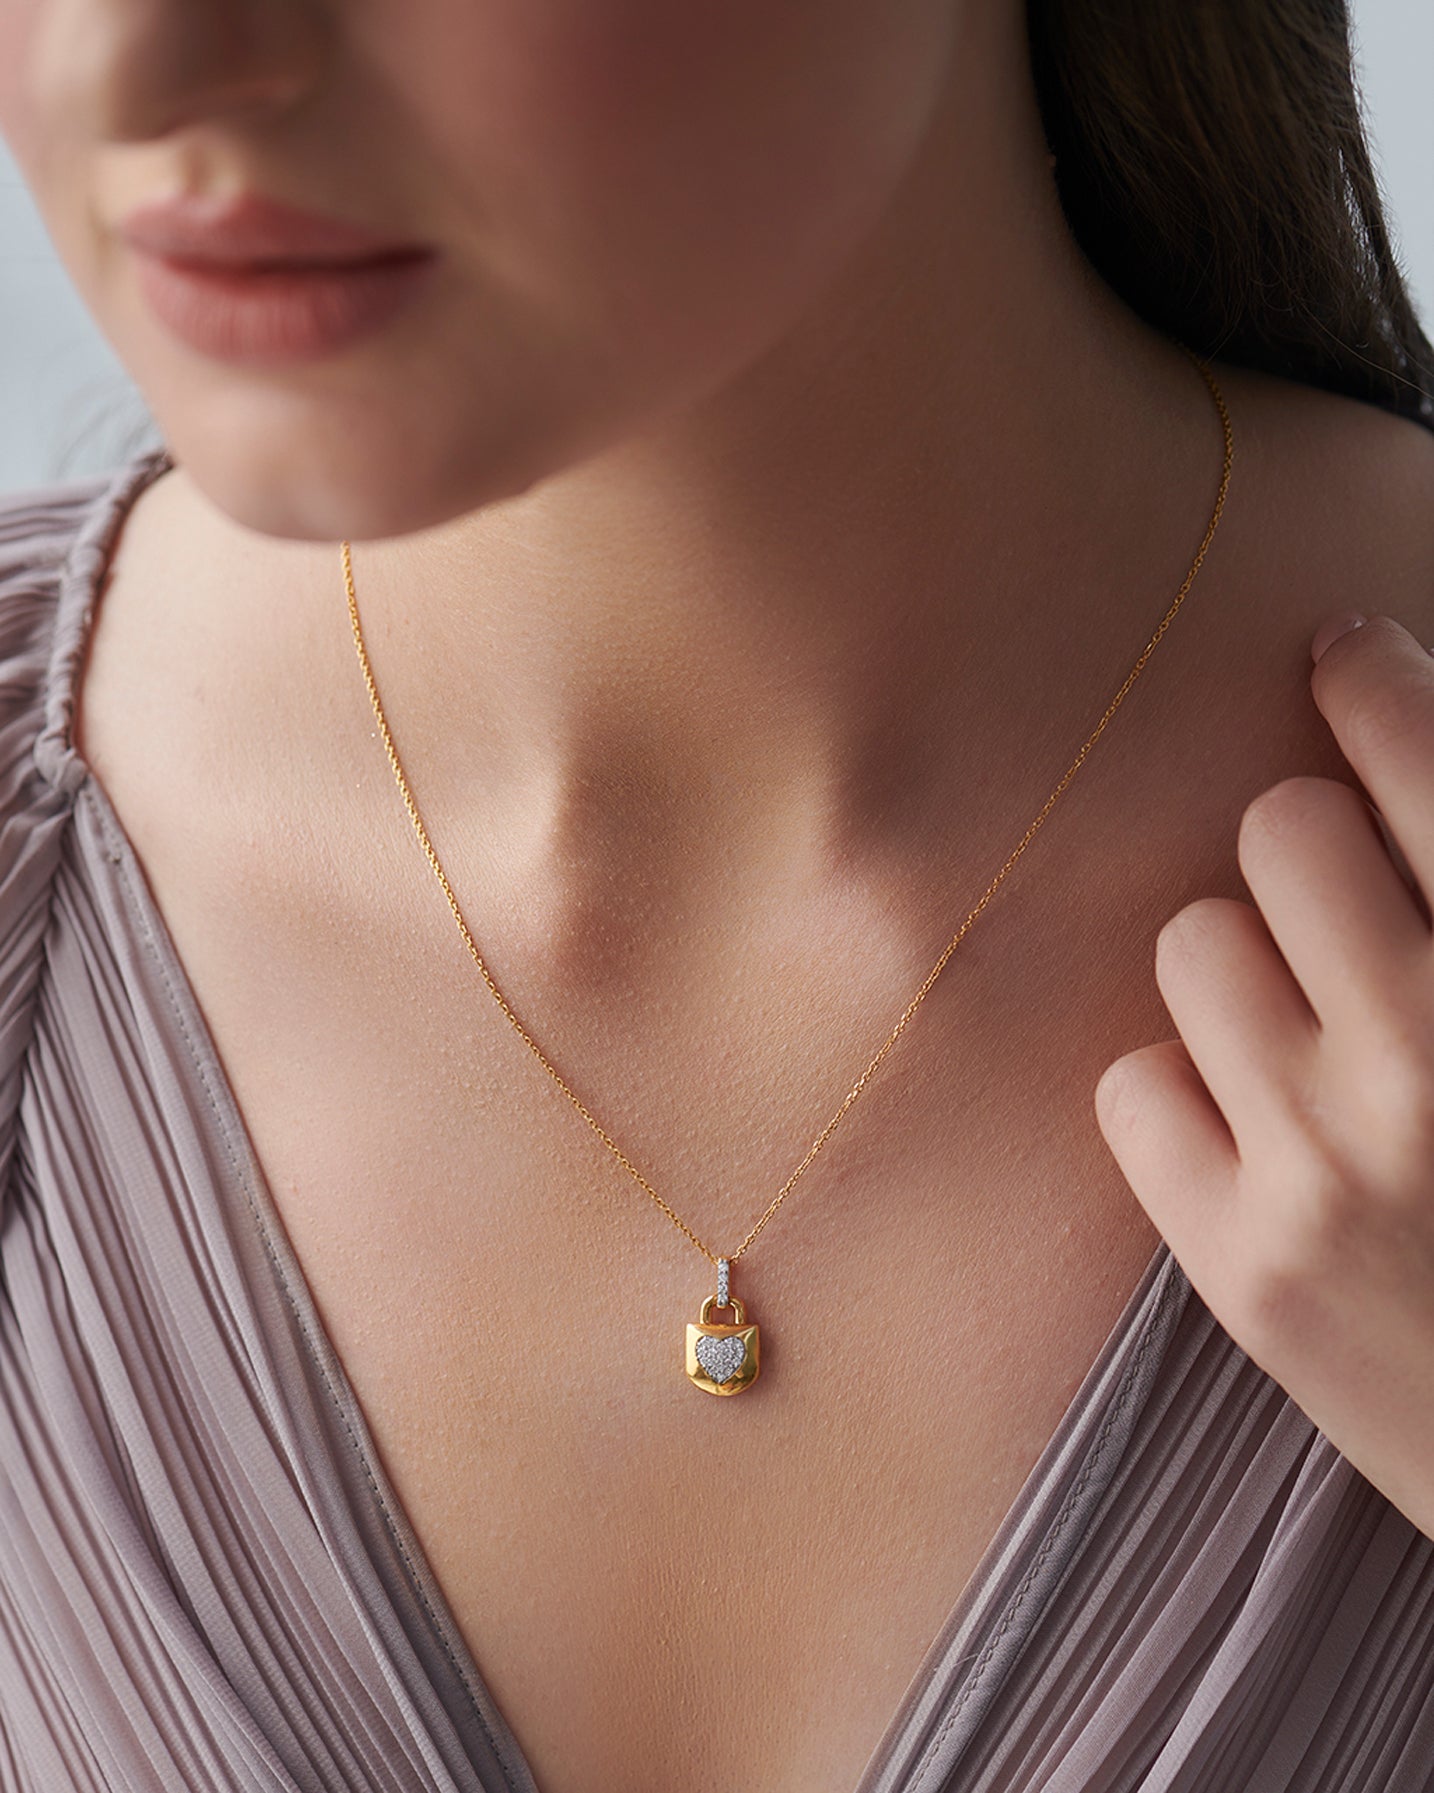 Heart Lock Cluster Diamond Necklace